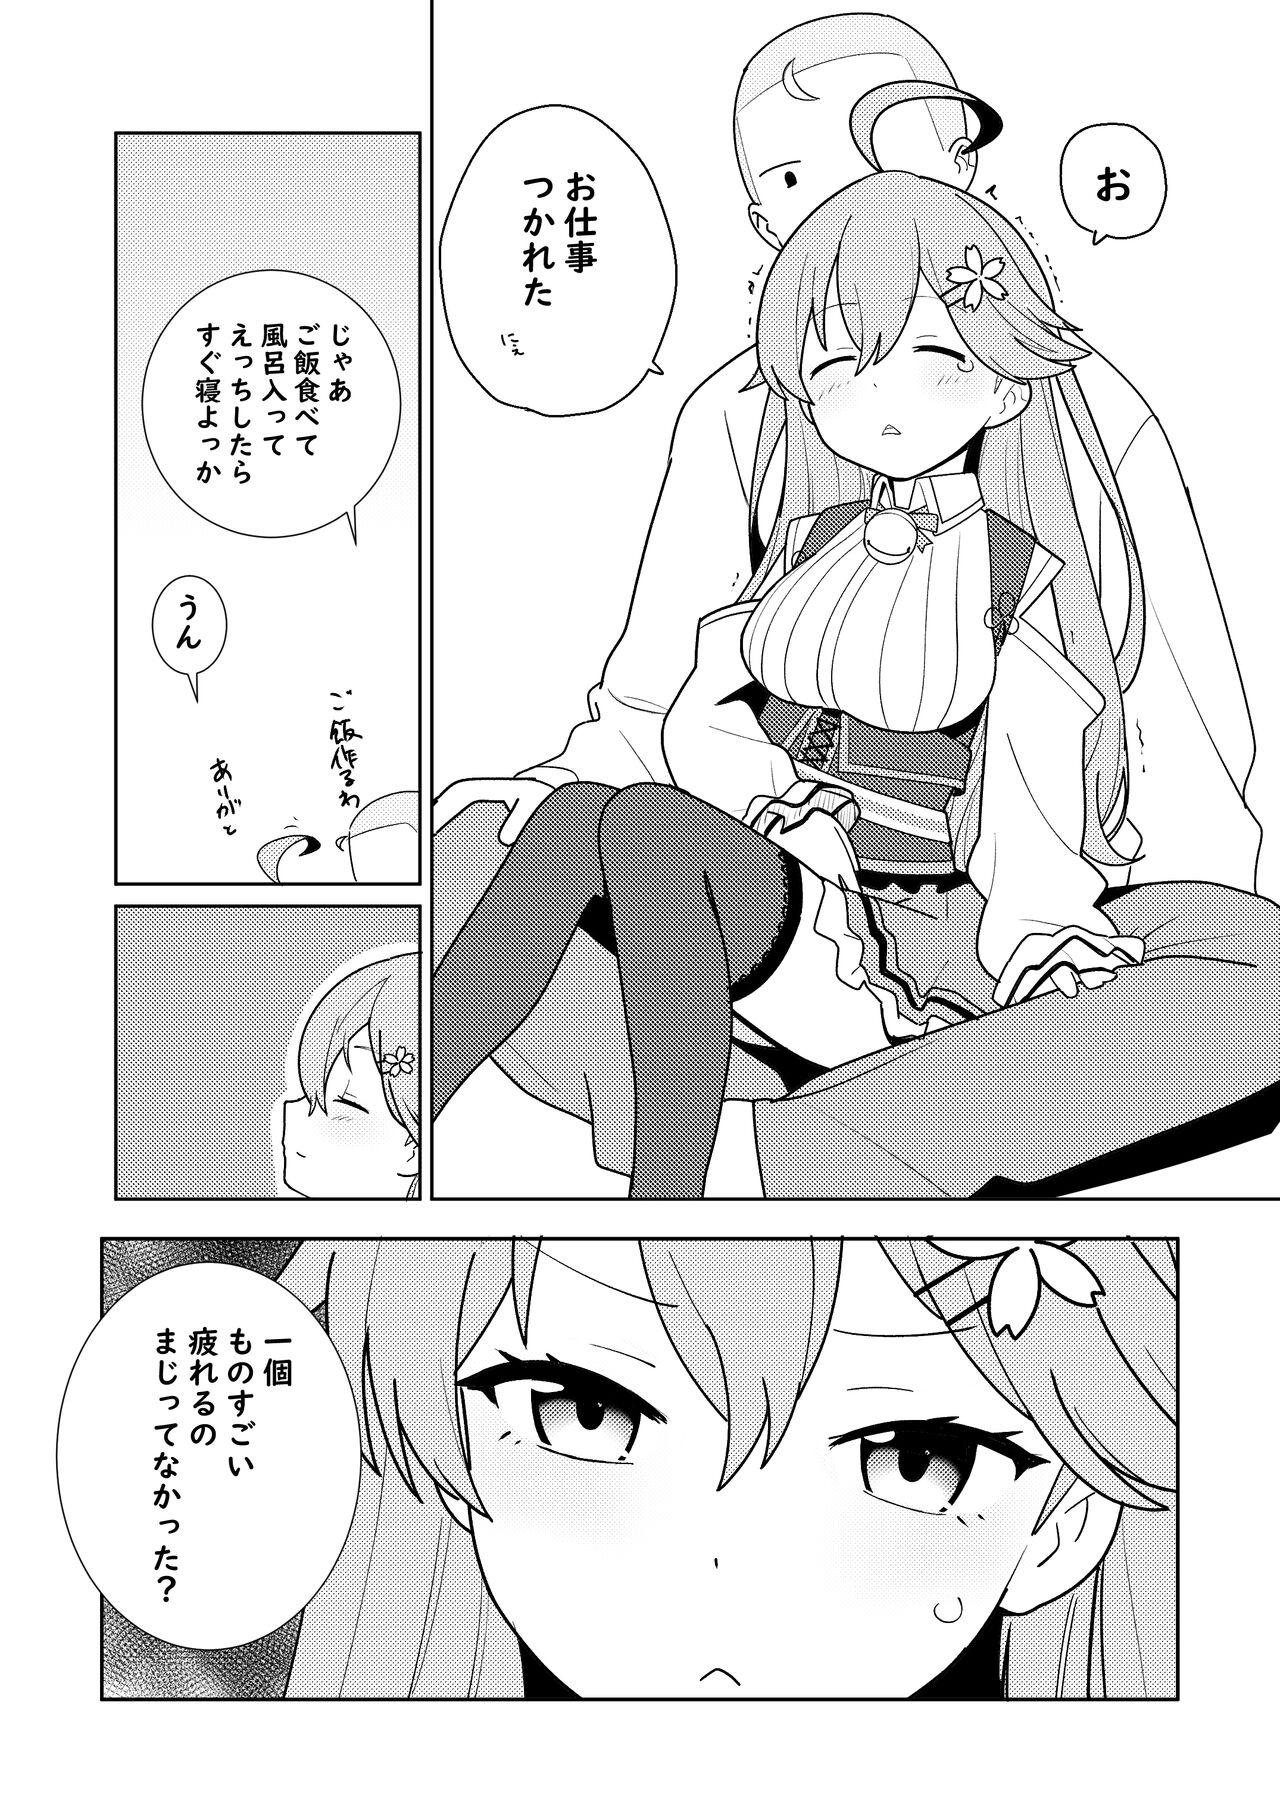 Lolicon Twitter Short Manga - Hololive Male - Page 10